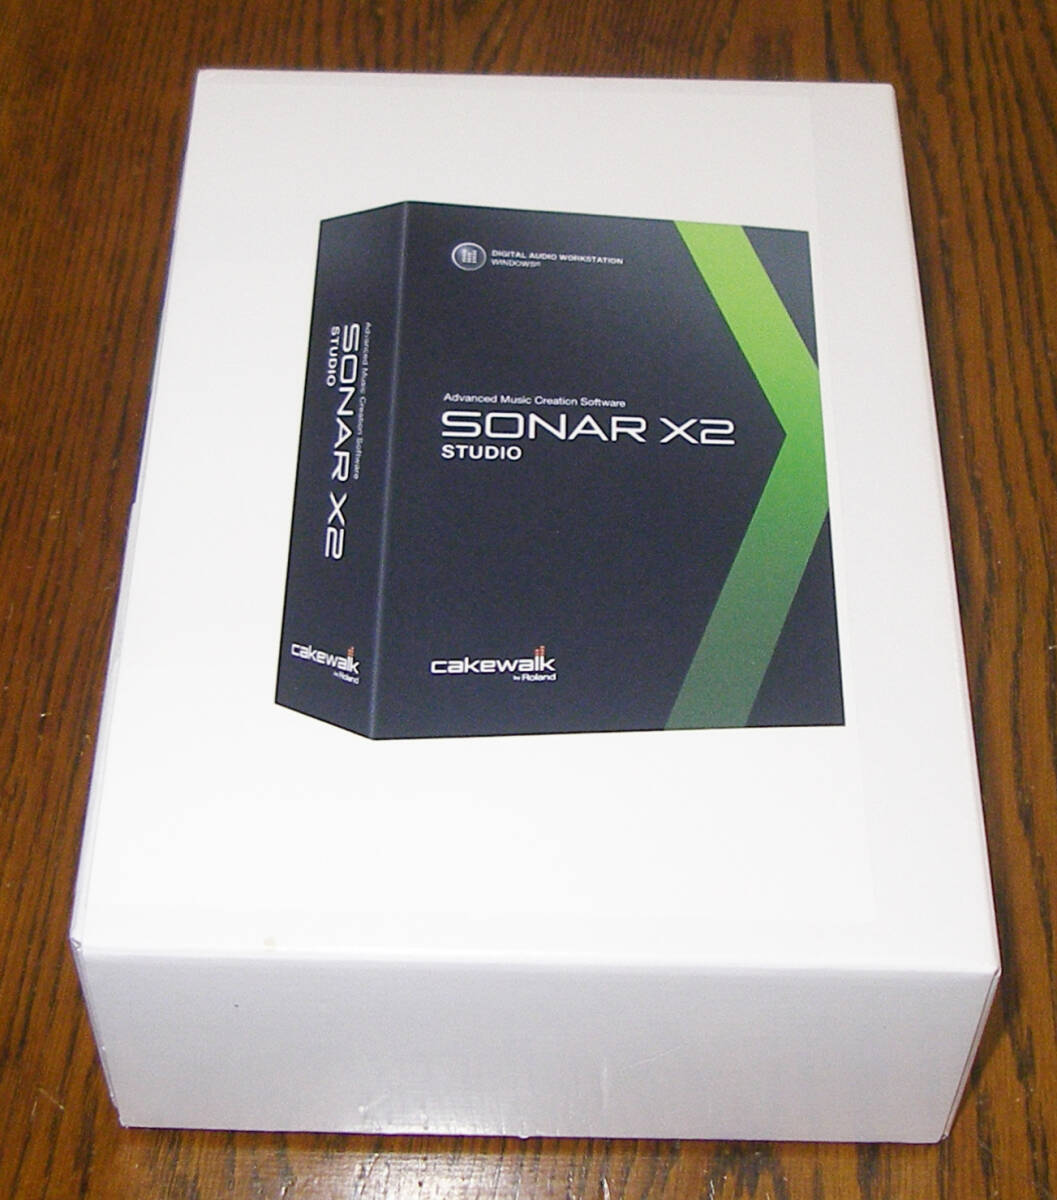 *Roland CAKEWALK SONAR X2 STUDIO Advanced Music Creation Sofware DVD* Japanese edition /ENGLISH*